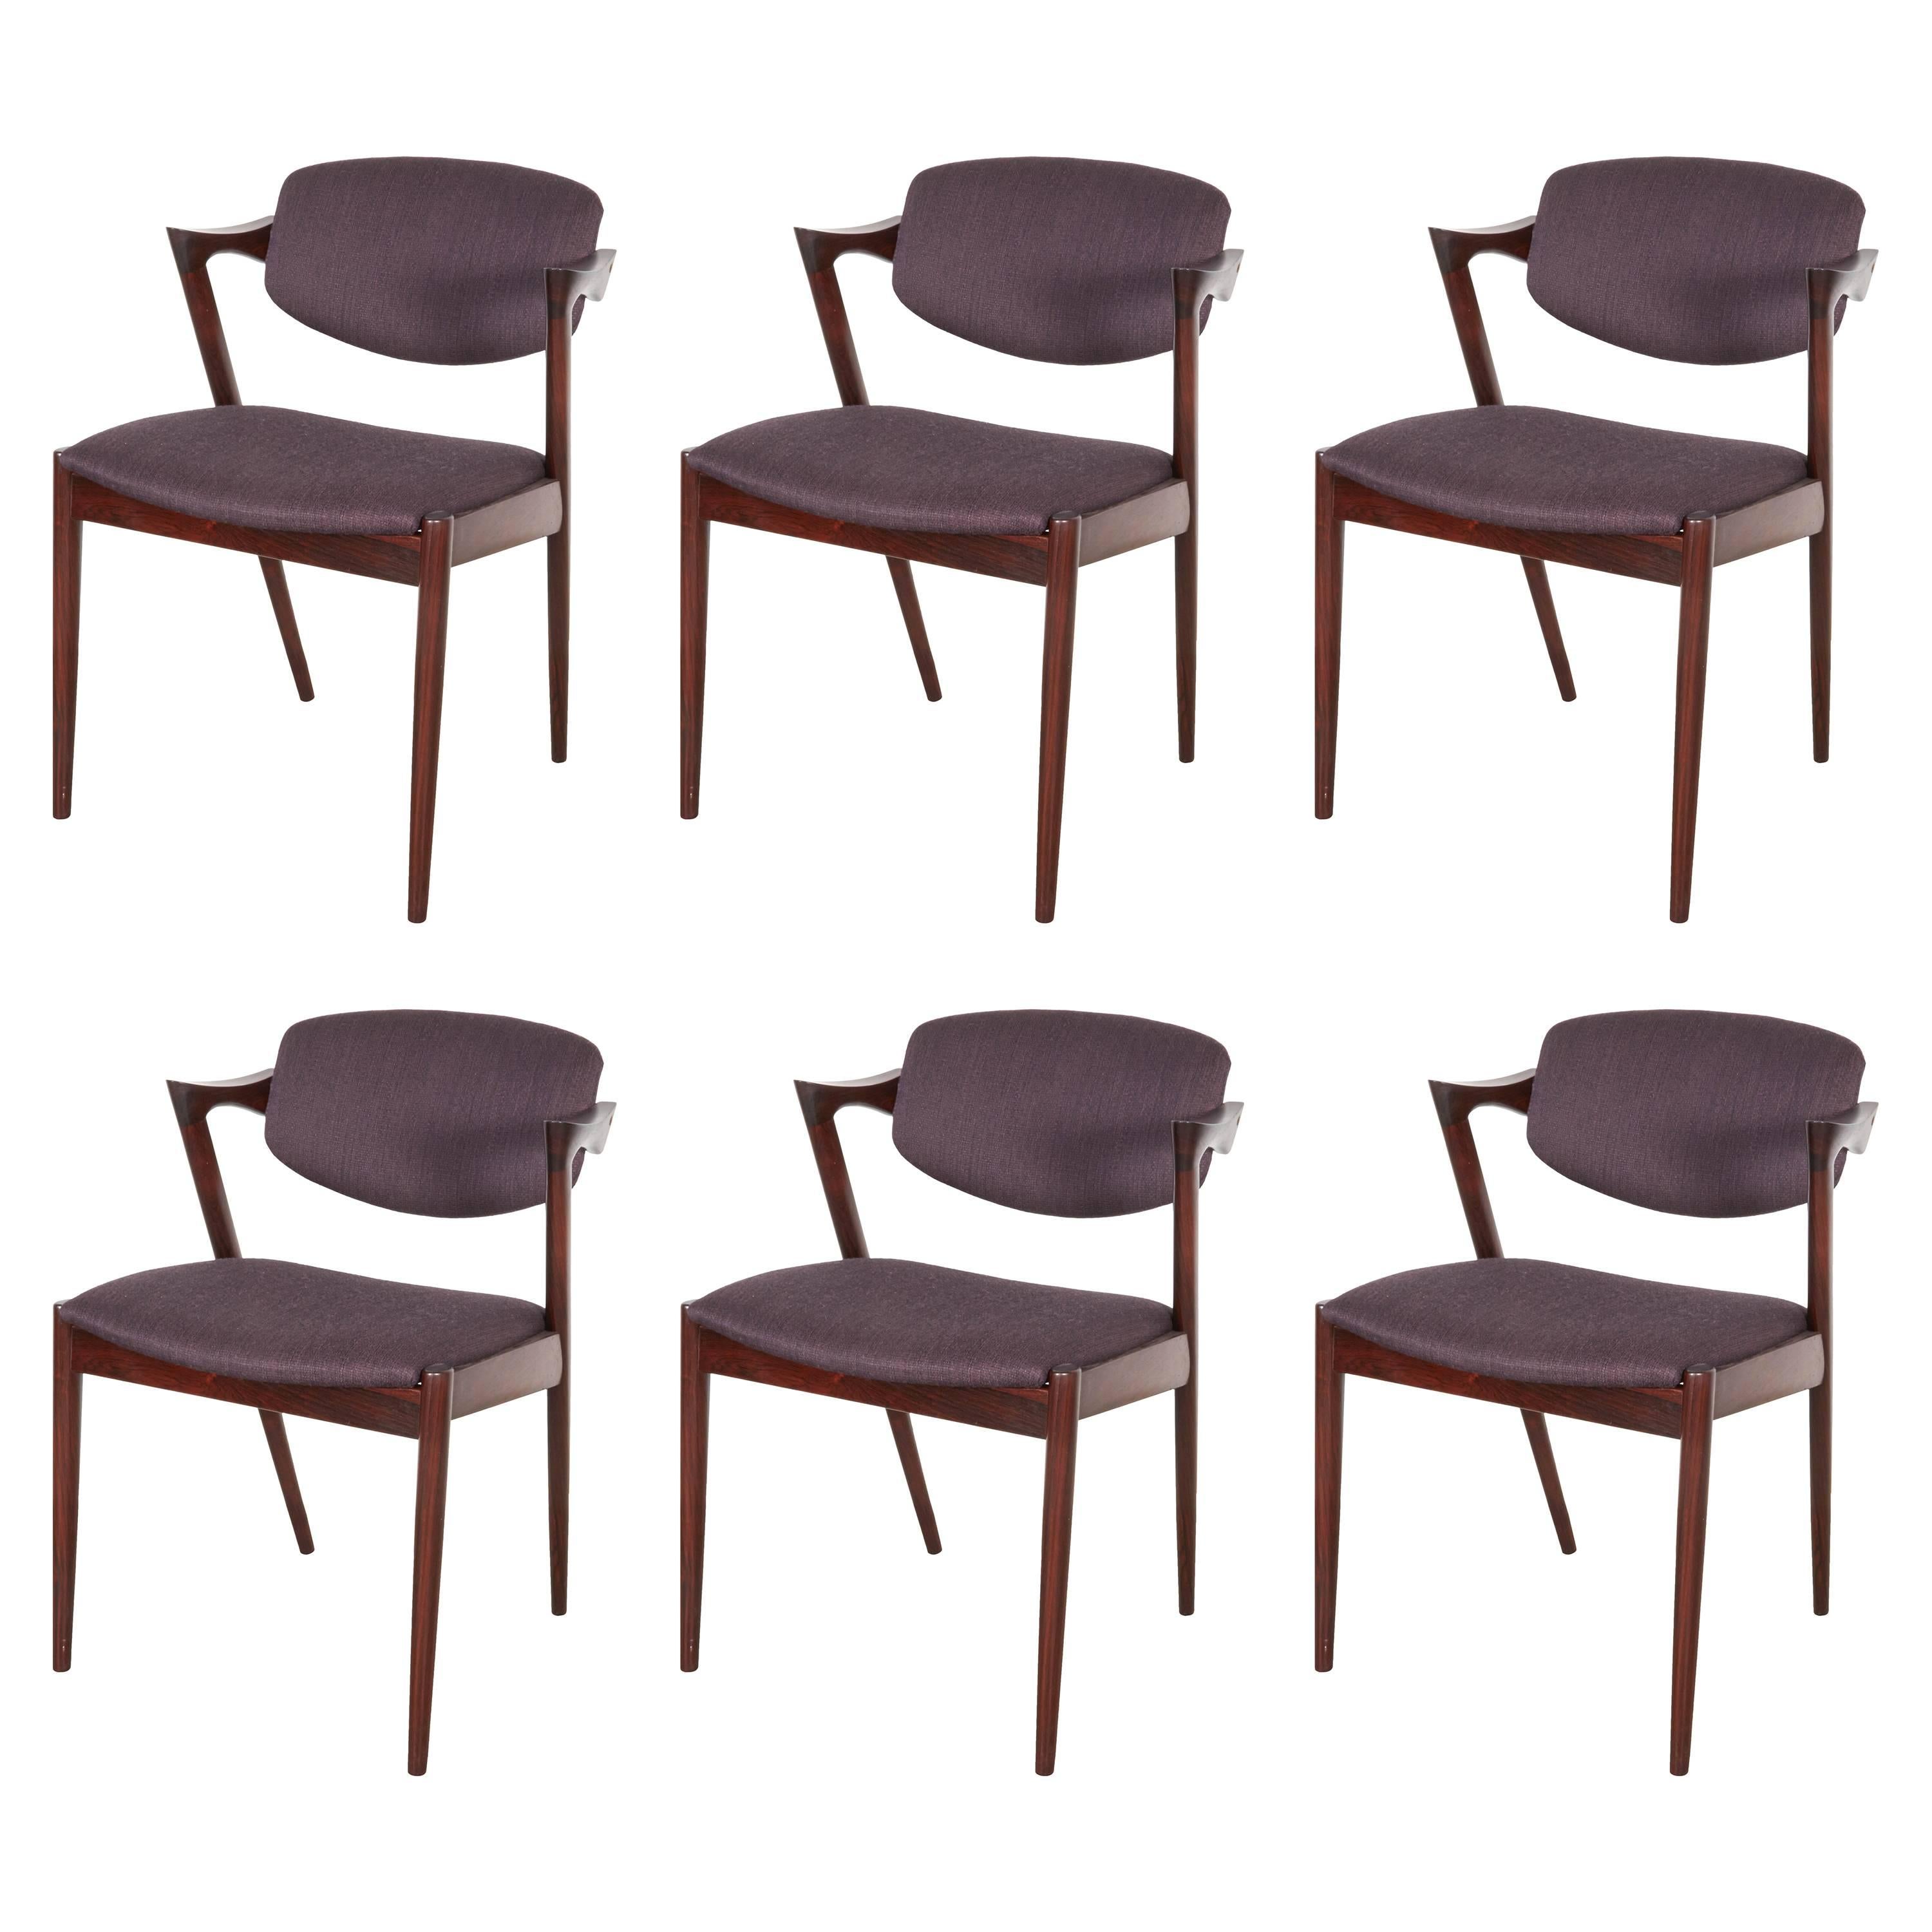 Kai Kristiansen No. 42 Dining Chairs, Set of 8